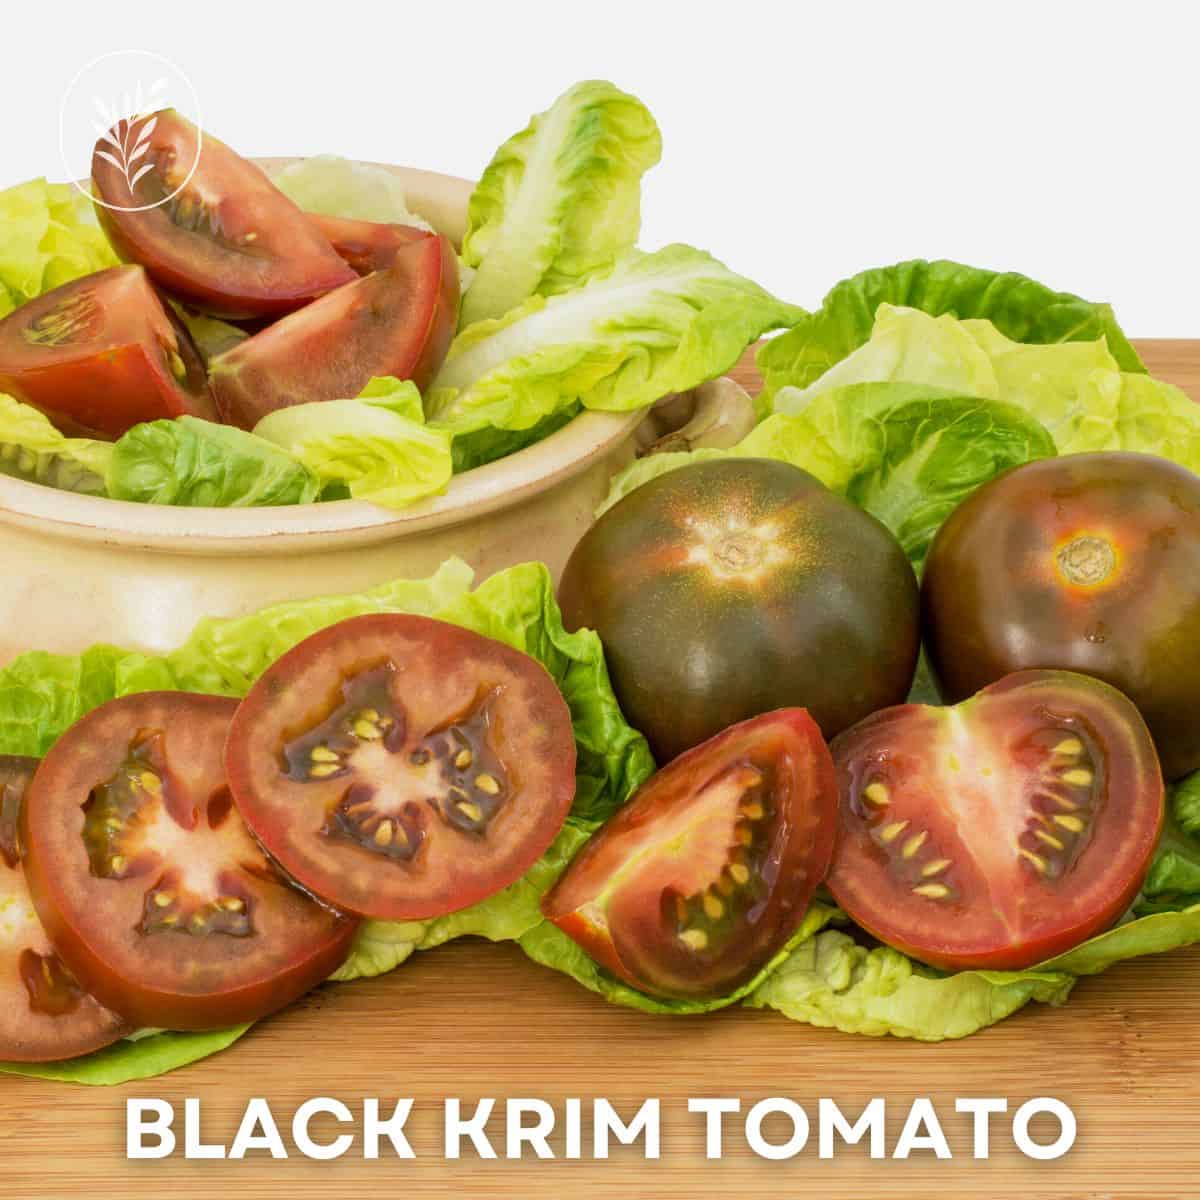 Black krim tomato via @home4theharvest